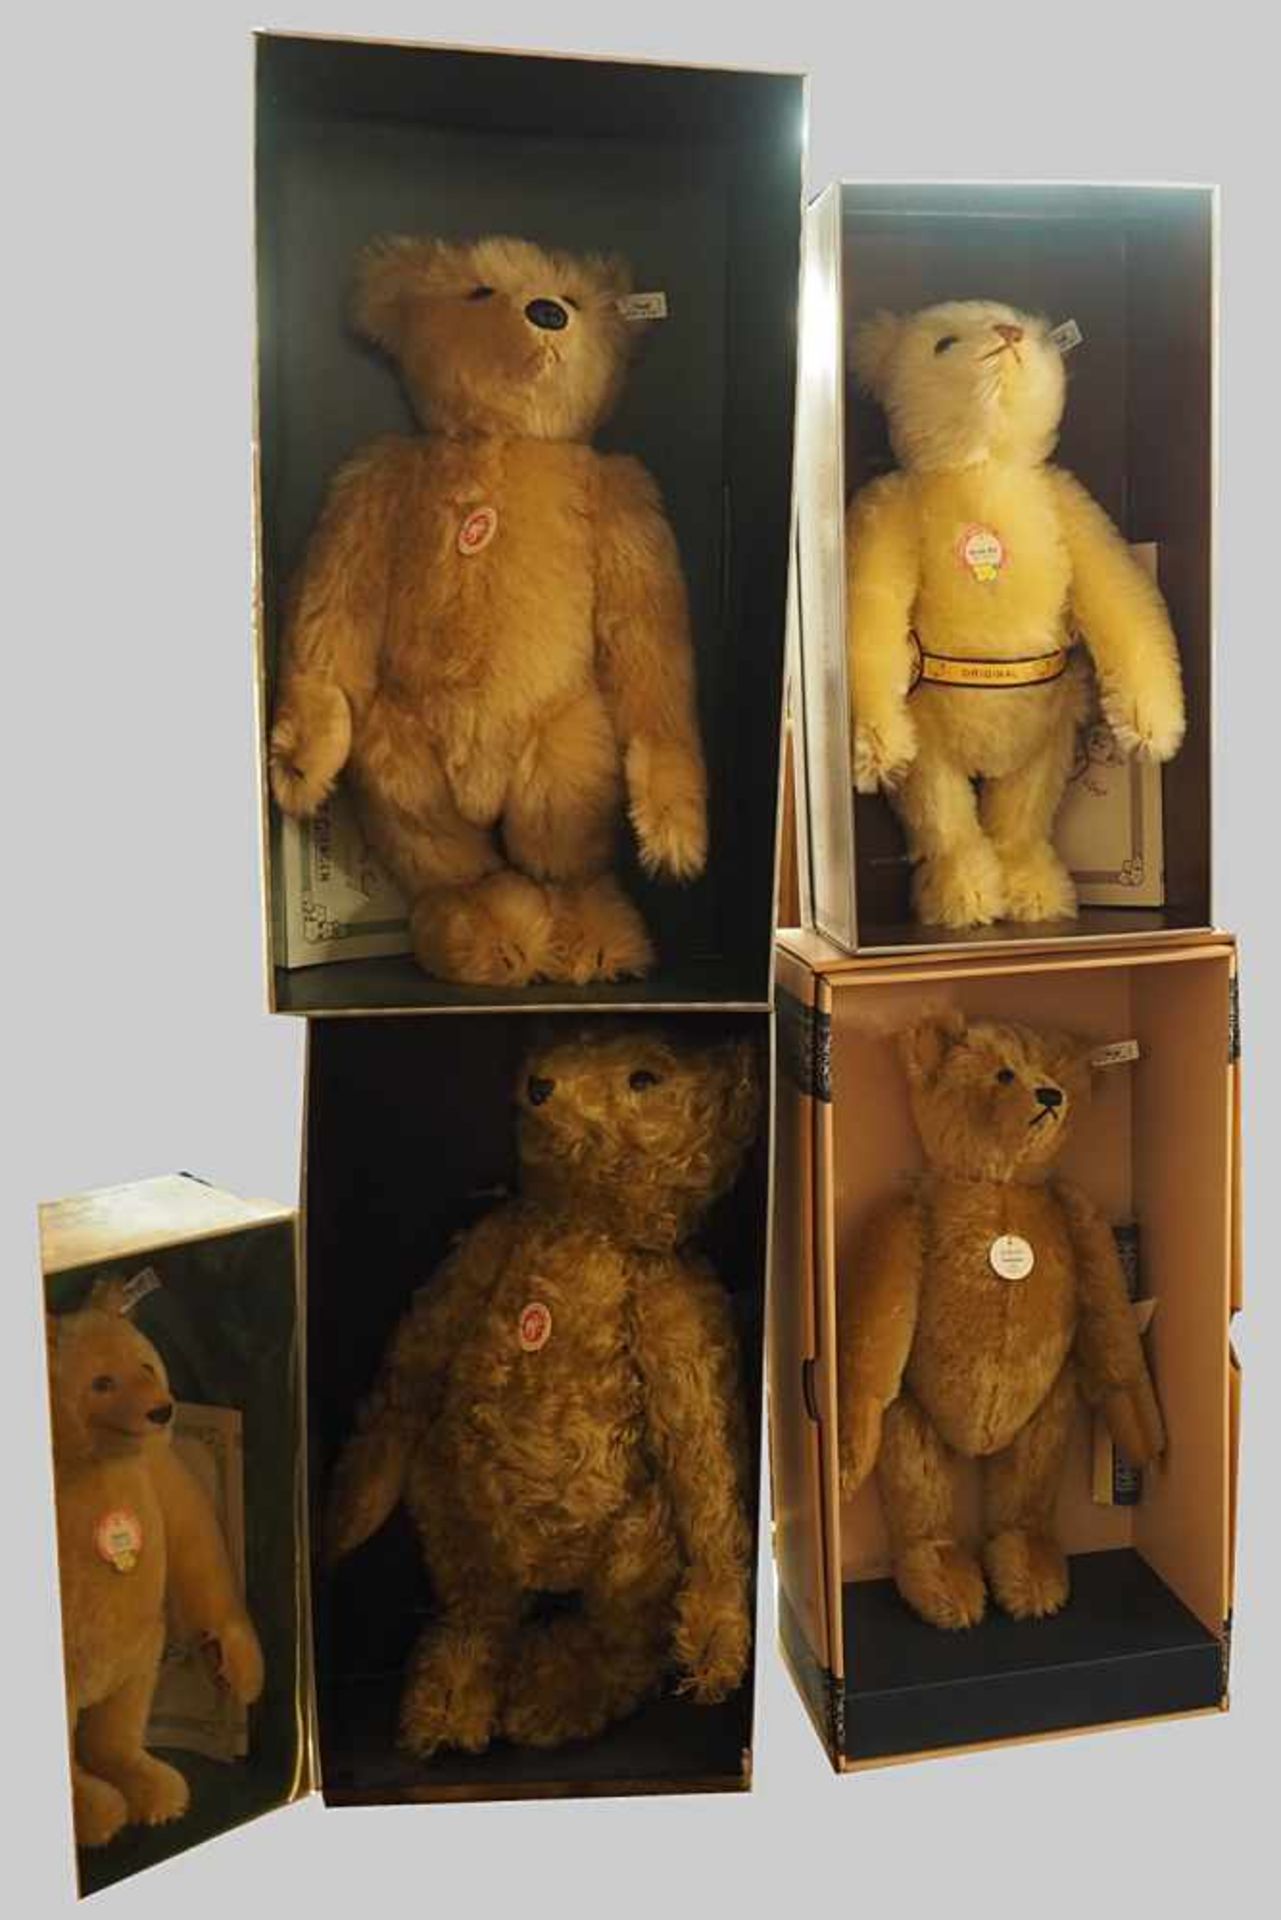 1 Konvolut Teddybären u.a. STEIFF, HERMANN u.a. Mohair u.a.Replika und limitierte Sondereditionen - Bild 2 aus 2